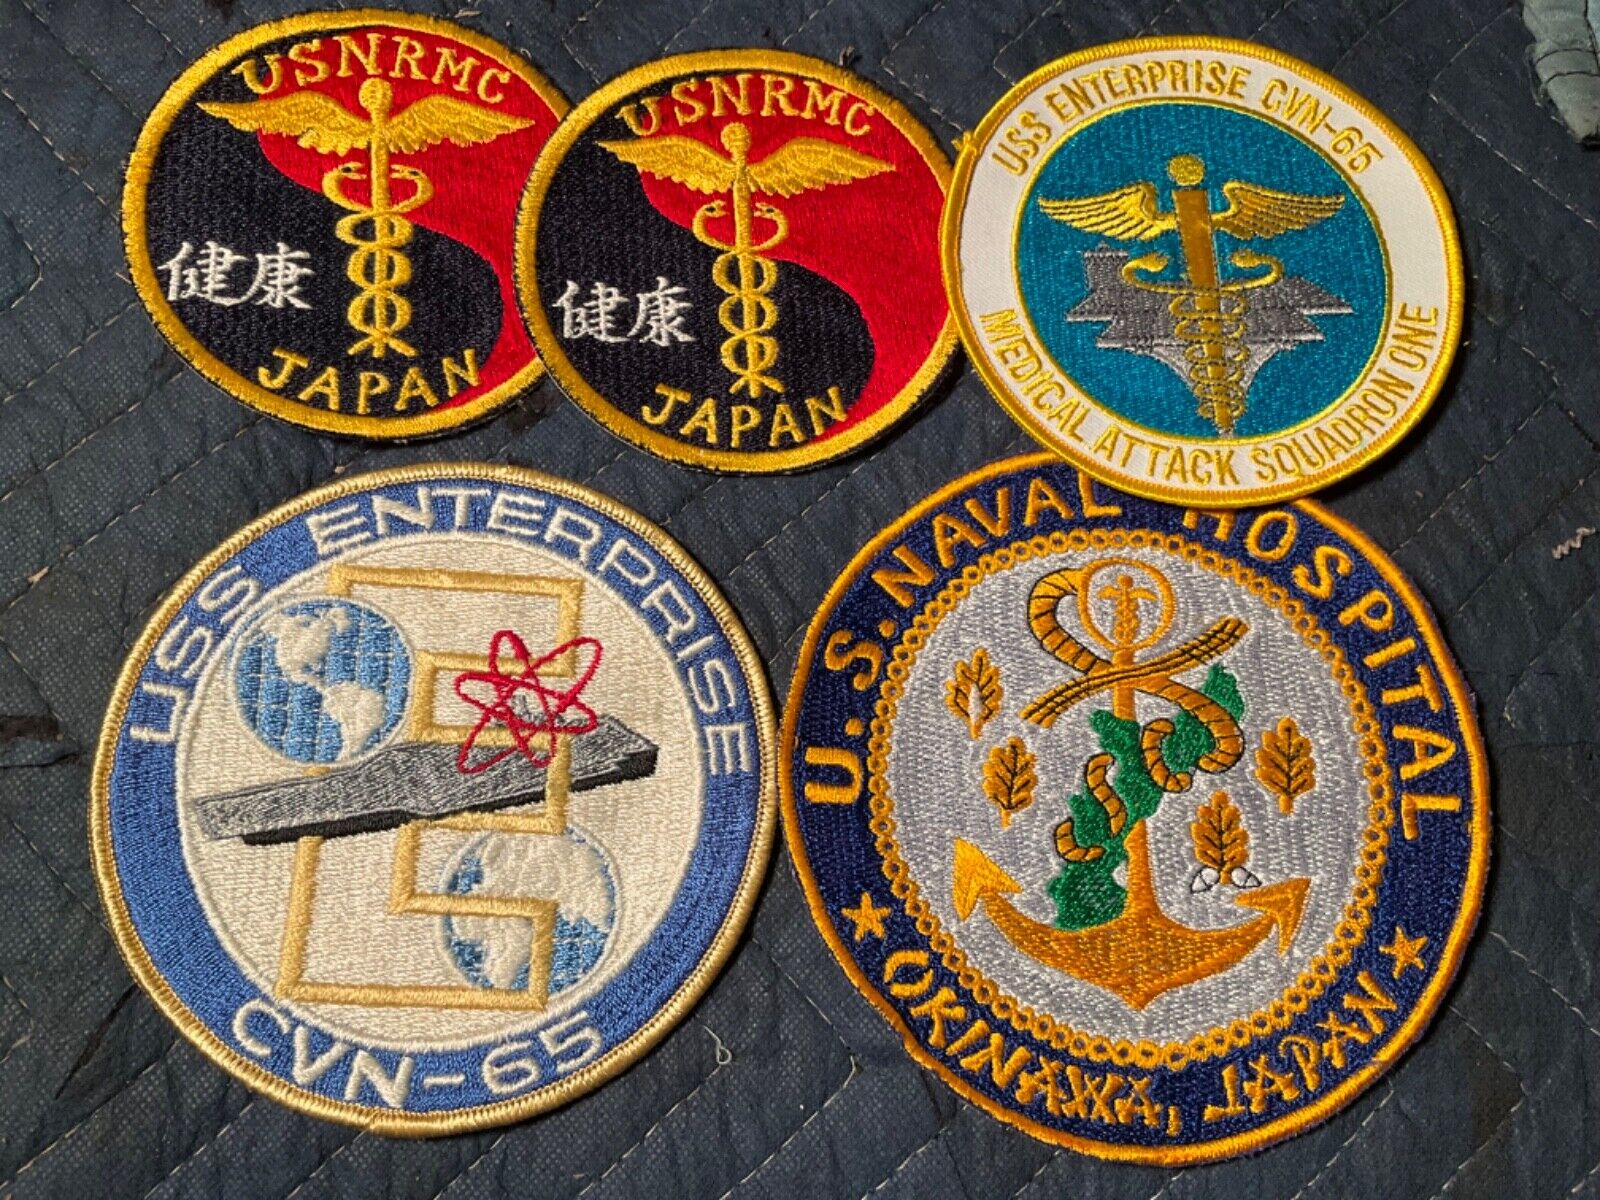 5 LARGE NAVY MEDICAL PATCHES VIETNAM WAR USS ENTERPRISE, USNRMC